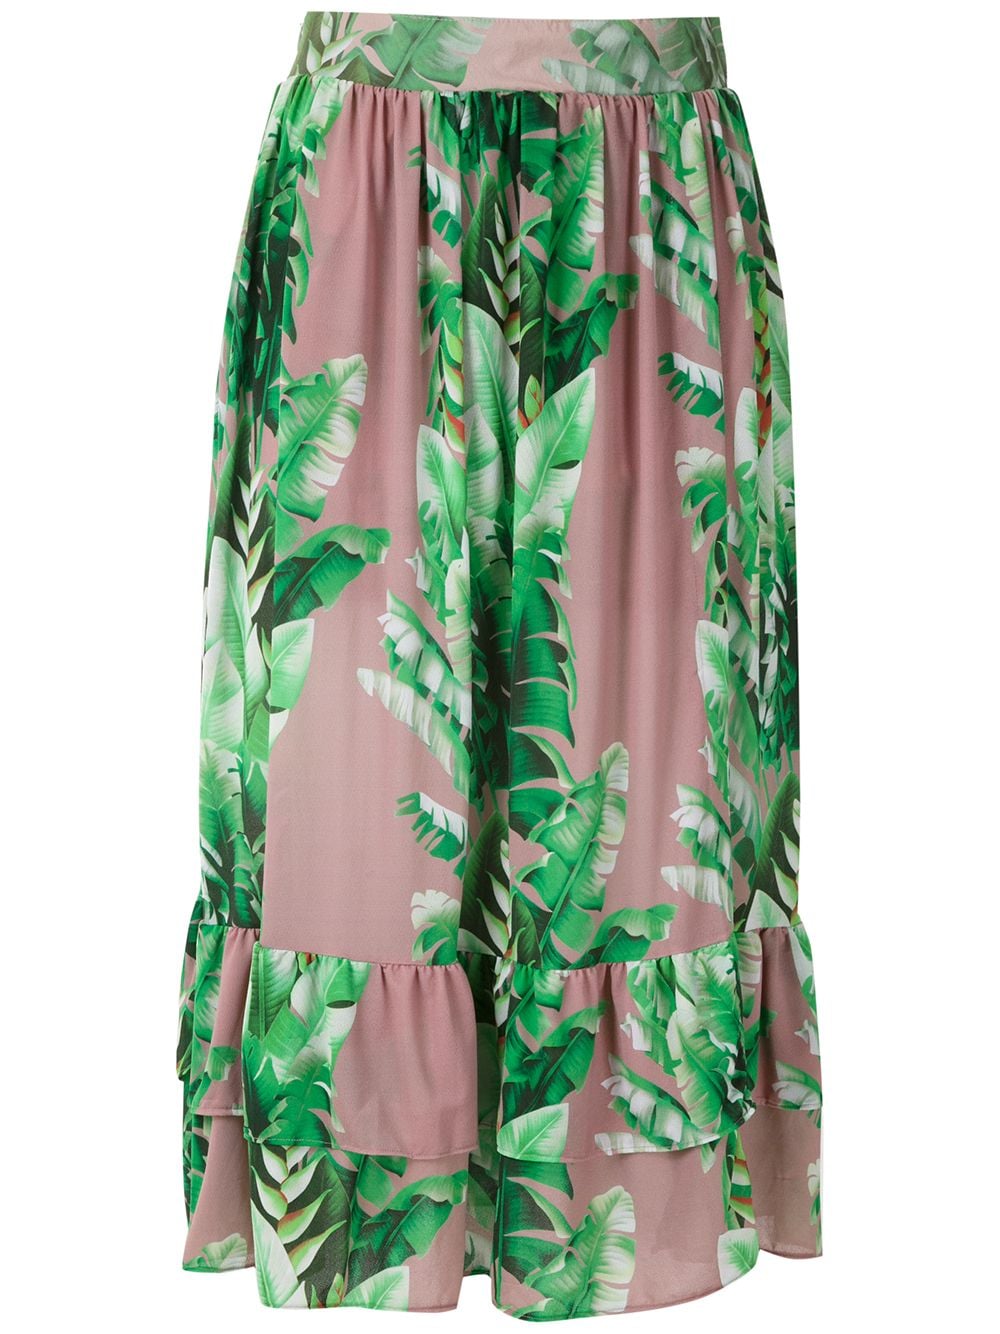 Amir Slama printed ruffle skirt - Green von Amir Slama